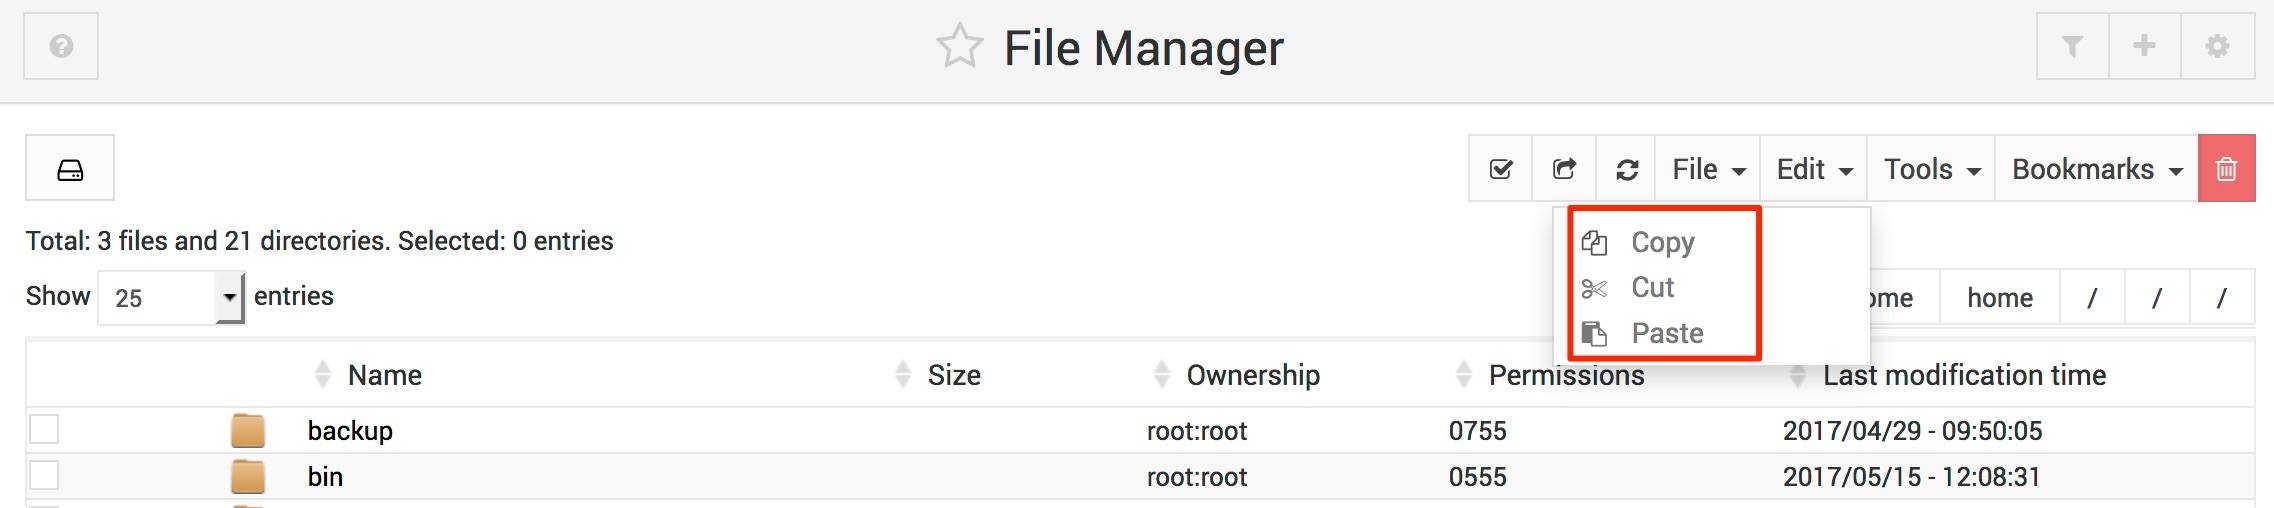 webmin file manager 3